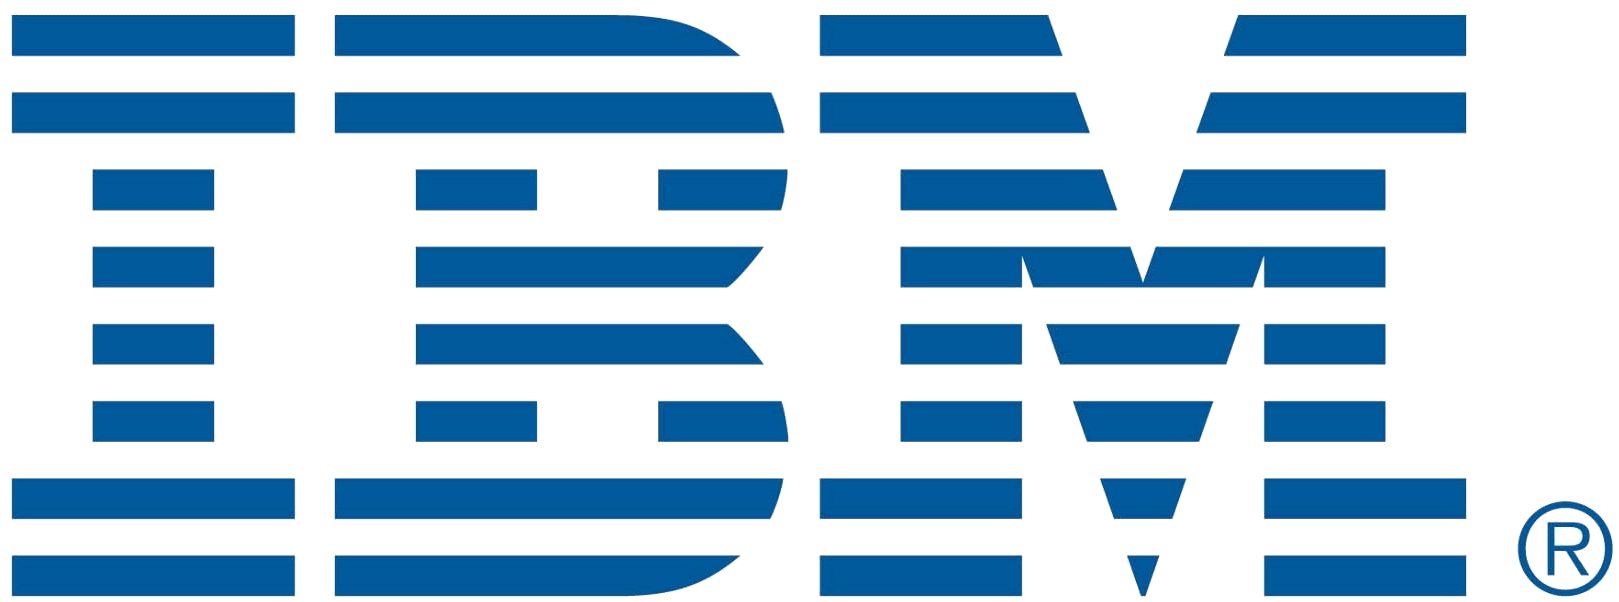 IBM business partner Logo photo - 1